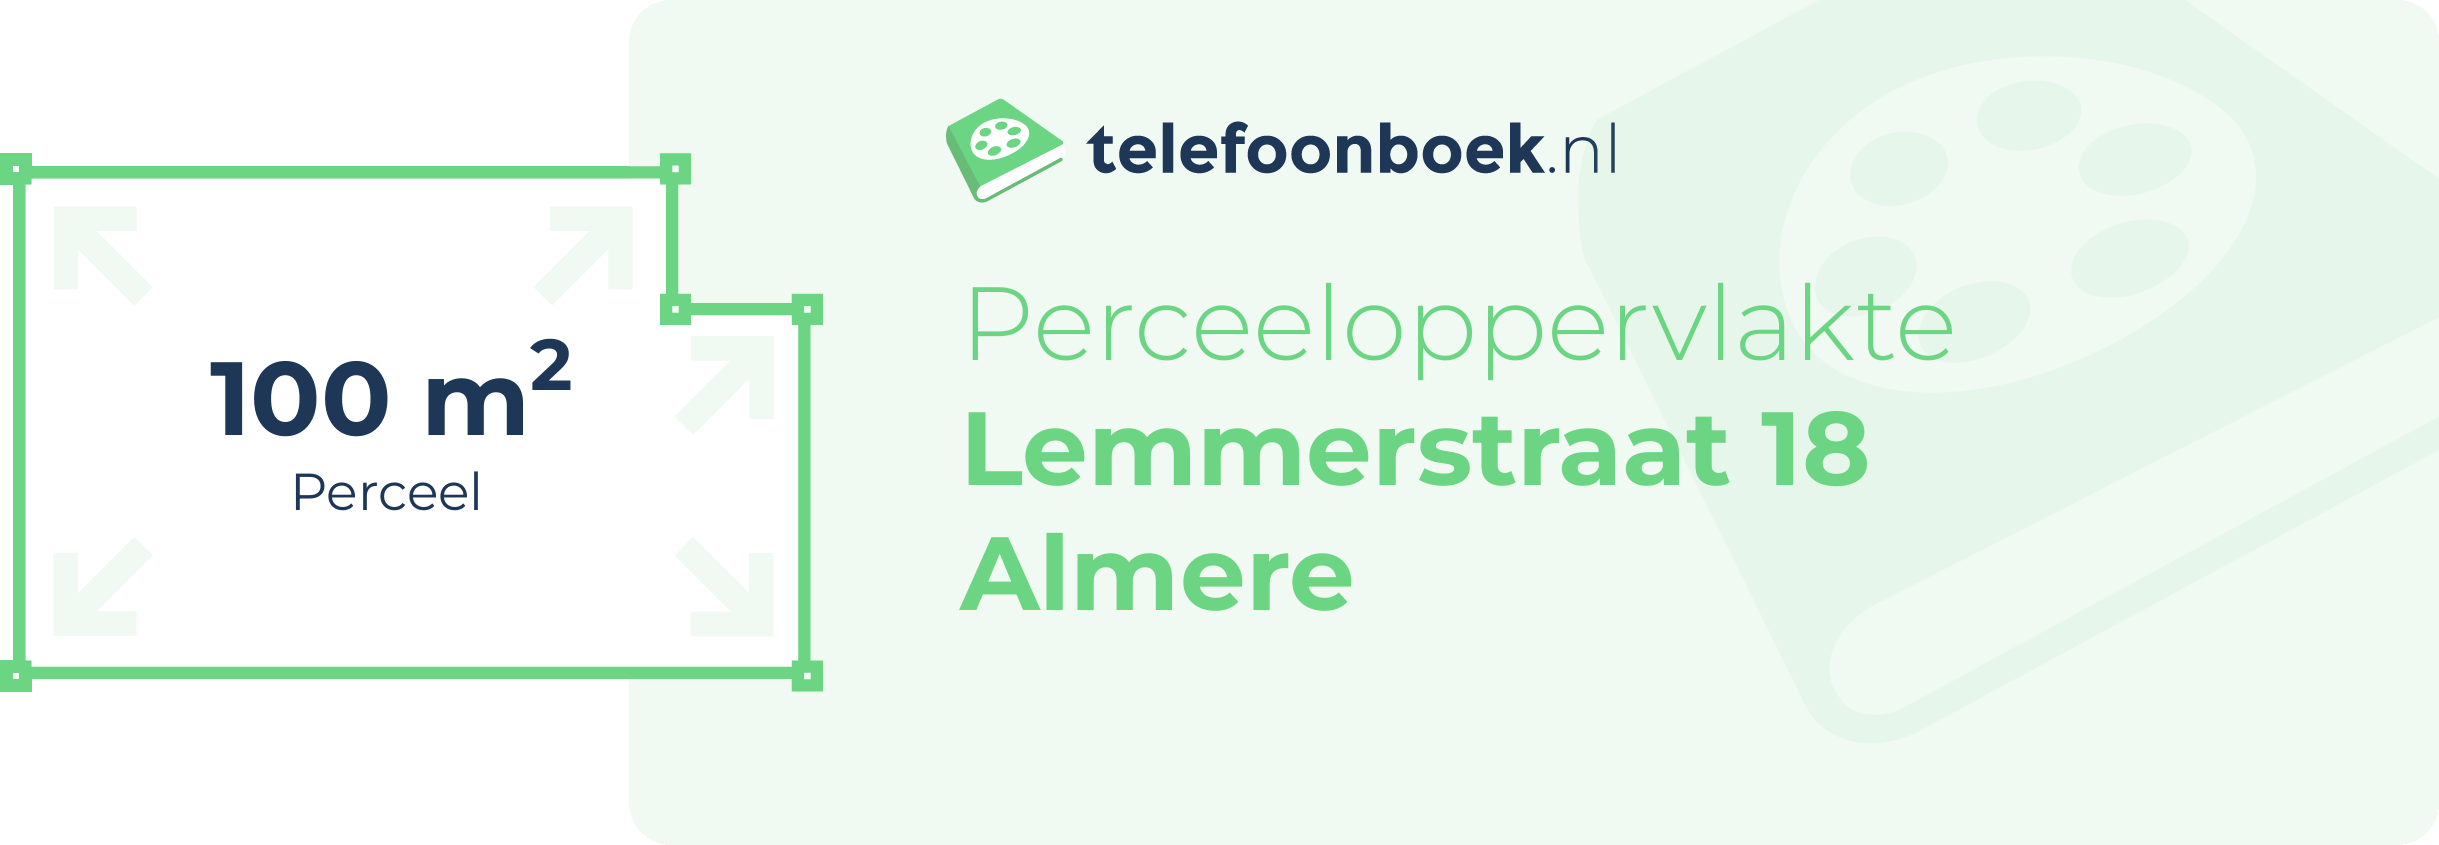 Perceeloppervlakte Lemmerstraat 18 Almere